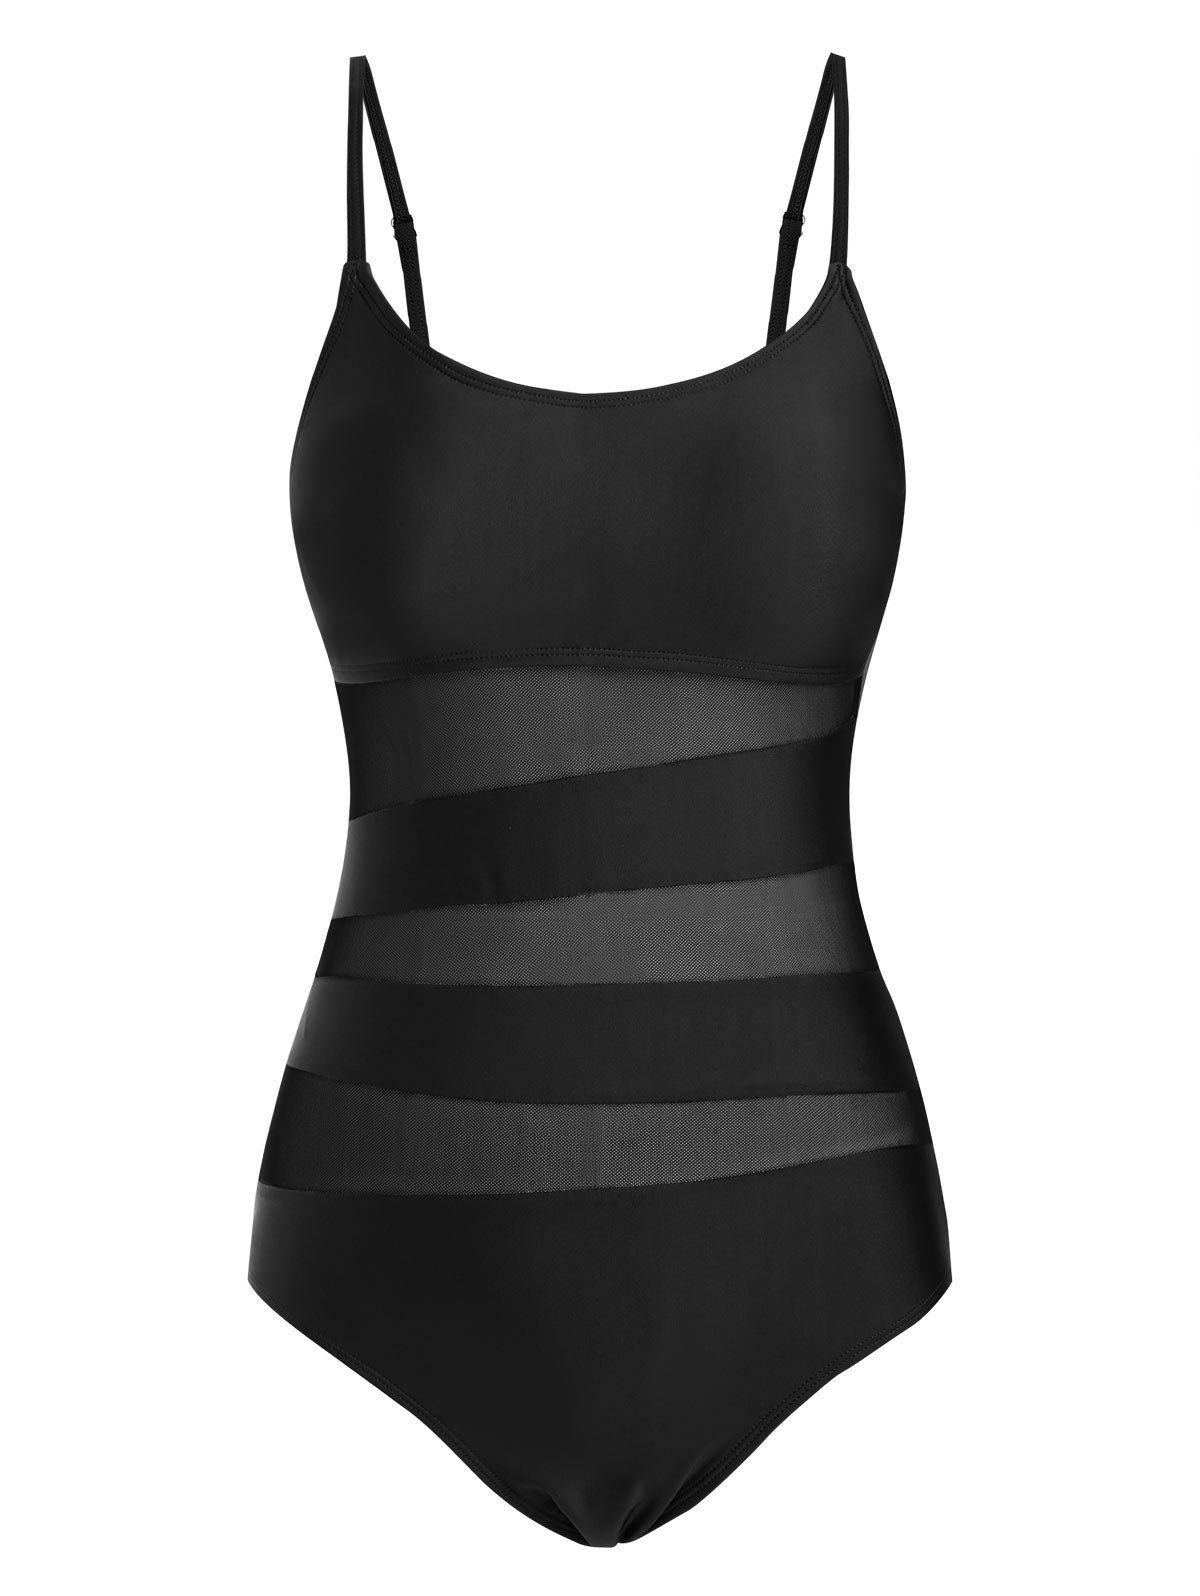 Cami Mesh Insert Plain One-piece Swimsuit - BLACK S